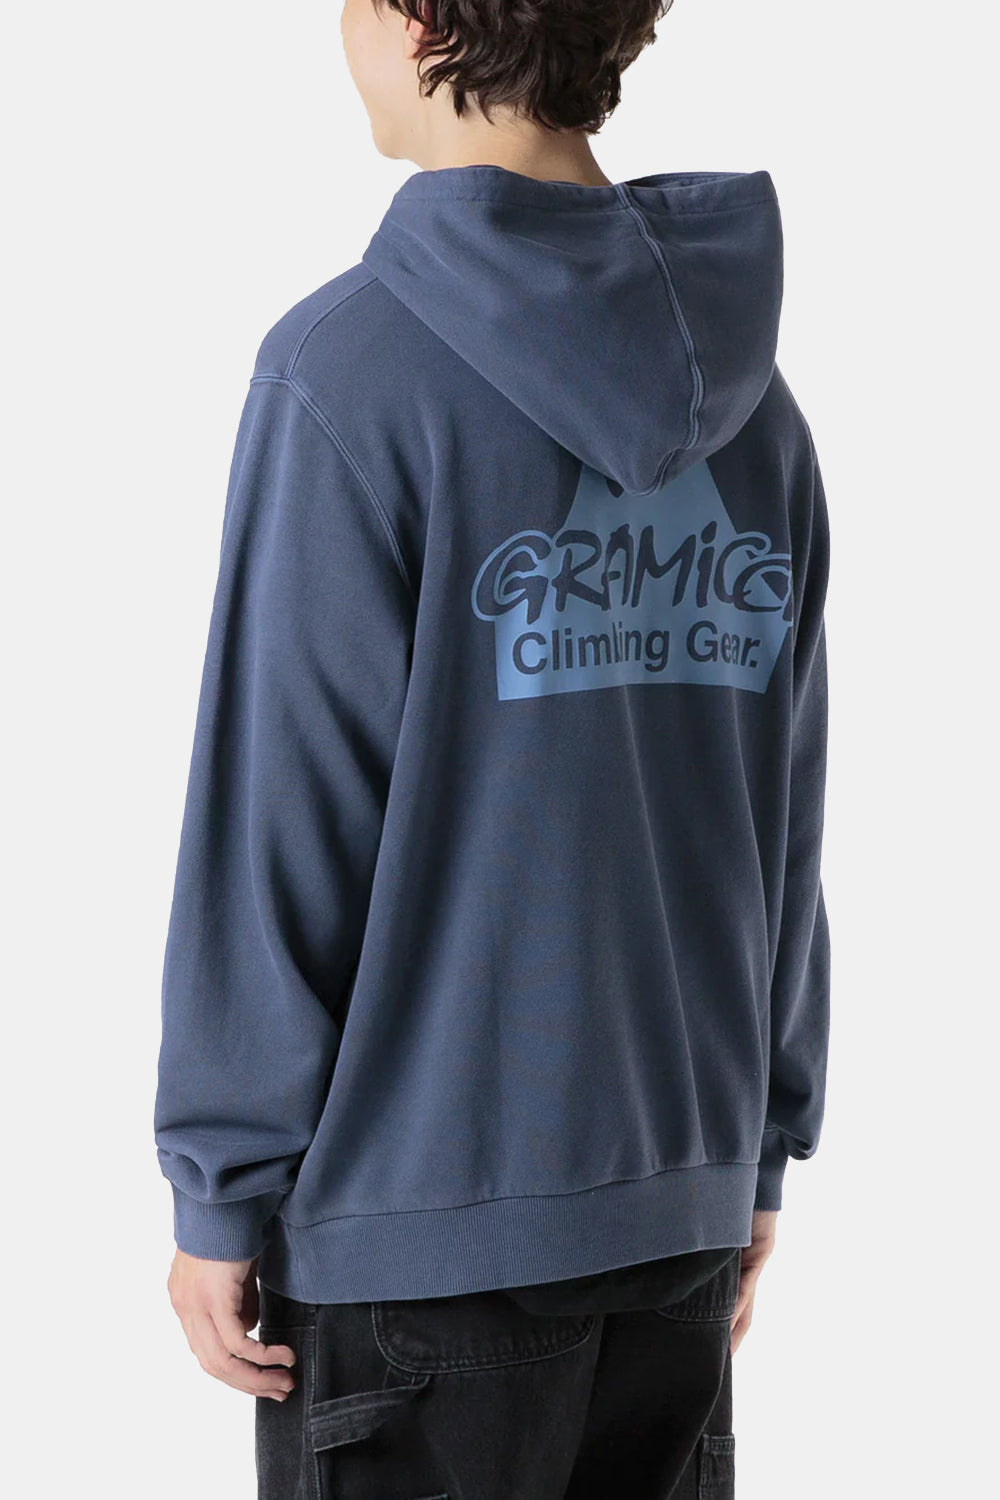 Gramicci Climbing Gear Hooded Sweatshirt (Navy Pigment)